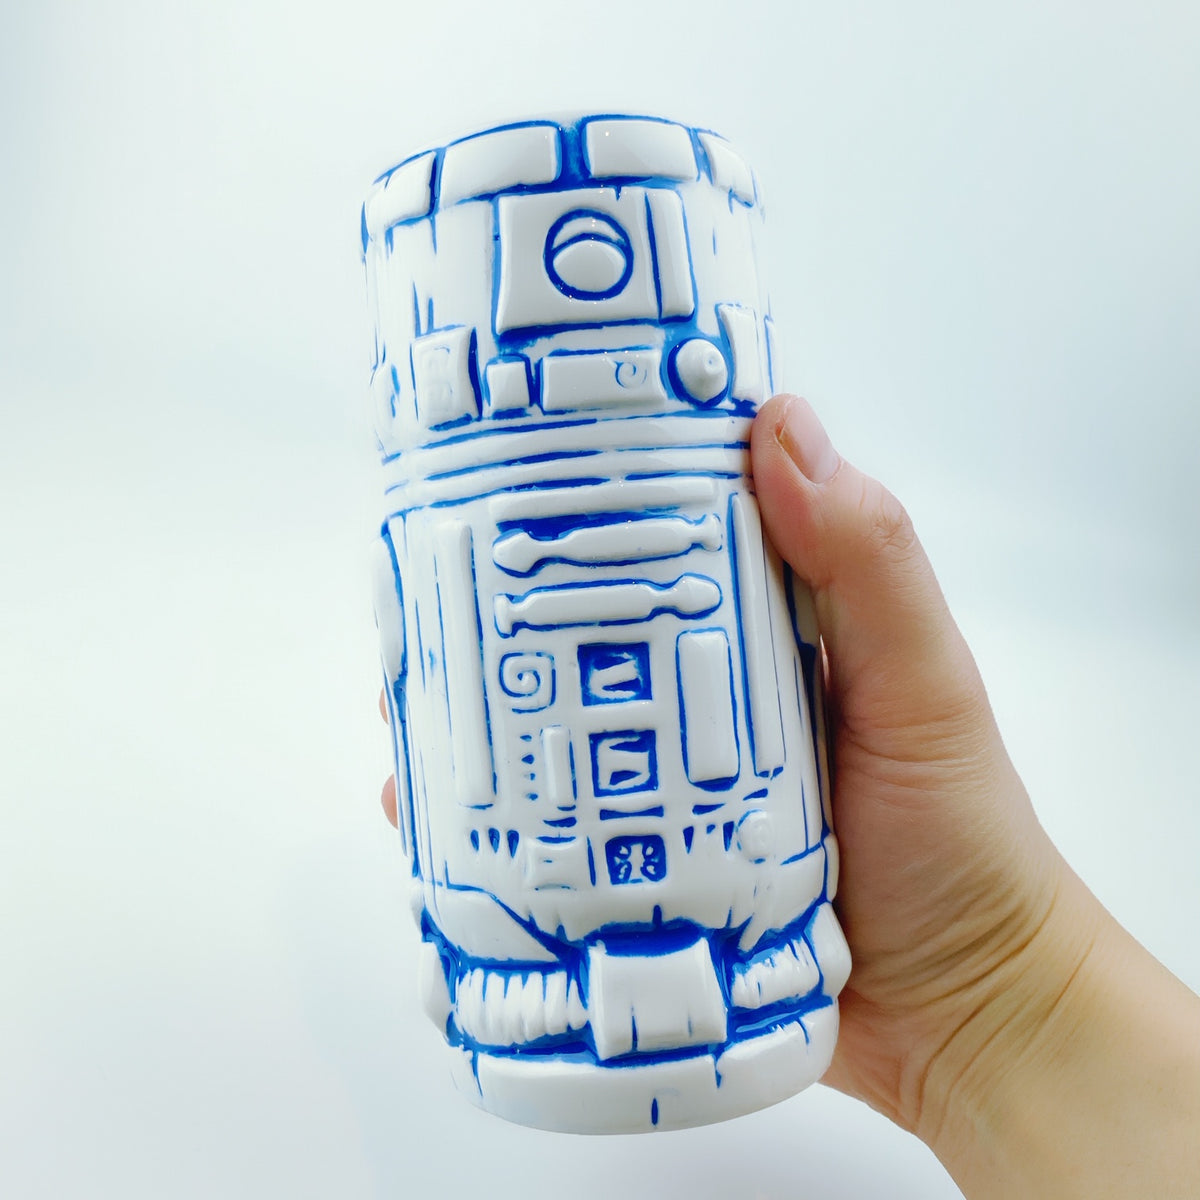 Vaso Chopp  Frosted Beer Mug - Star Wars 123 (R2 IPA) - Galactic Brew —  Latinafy